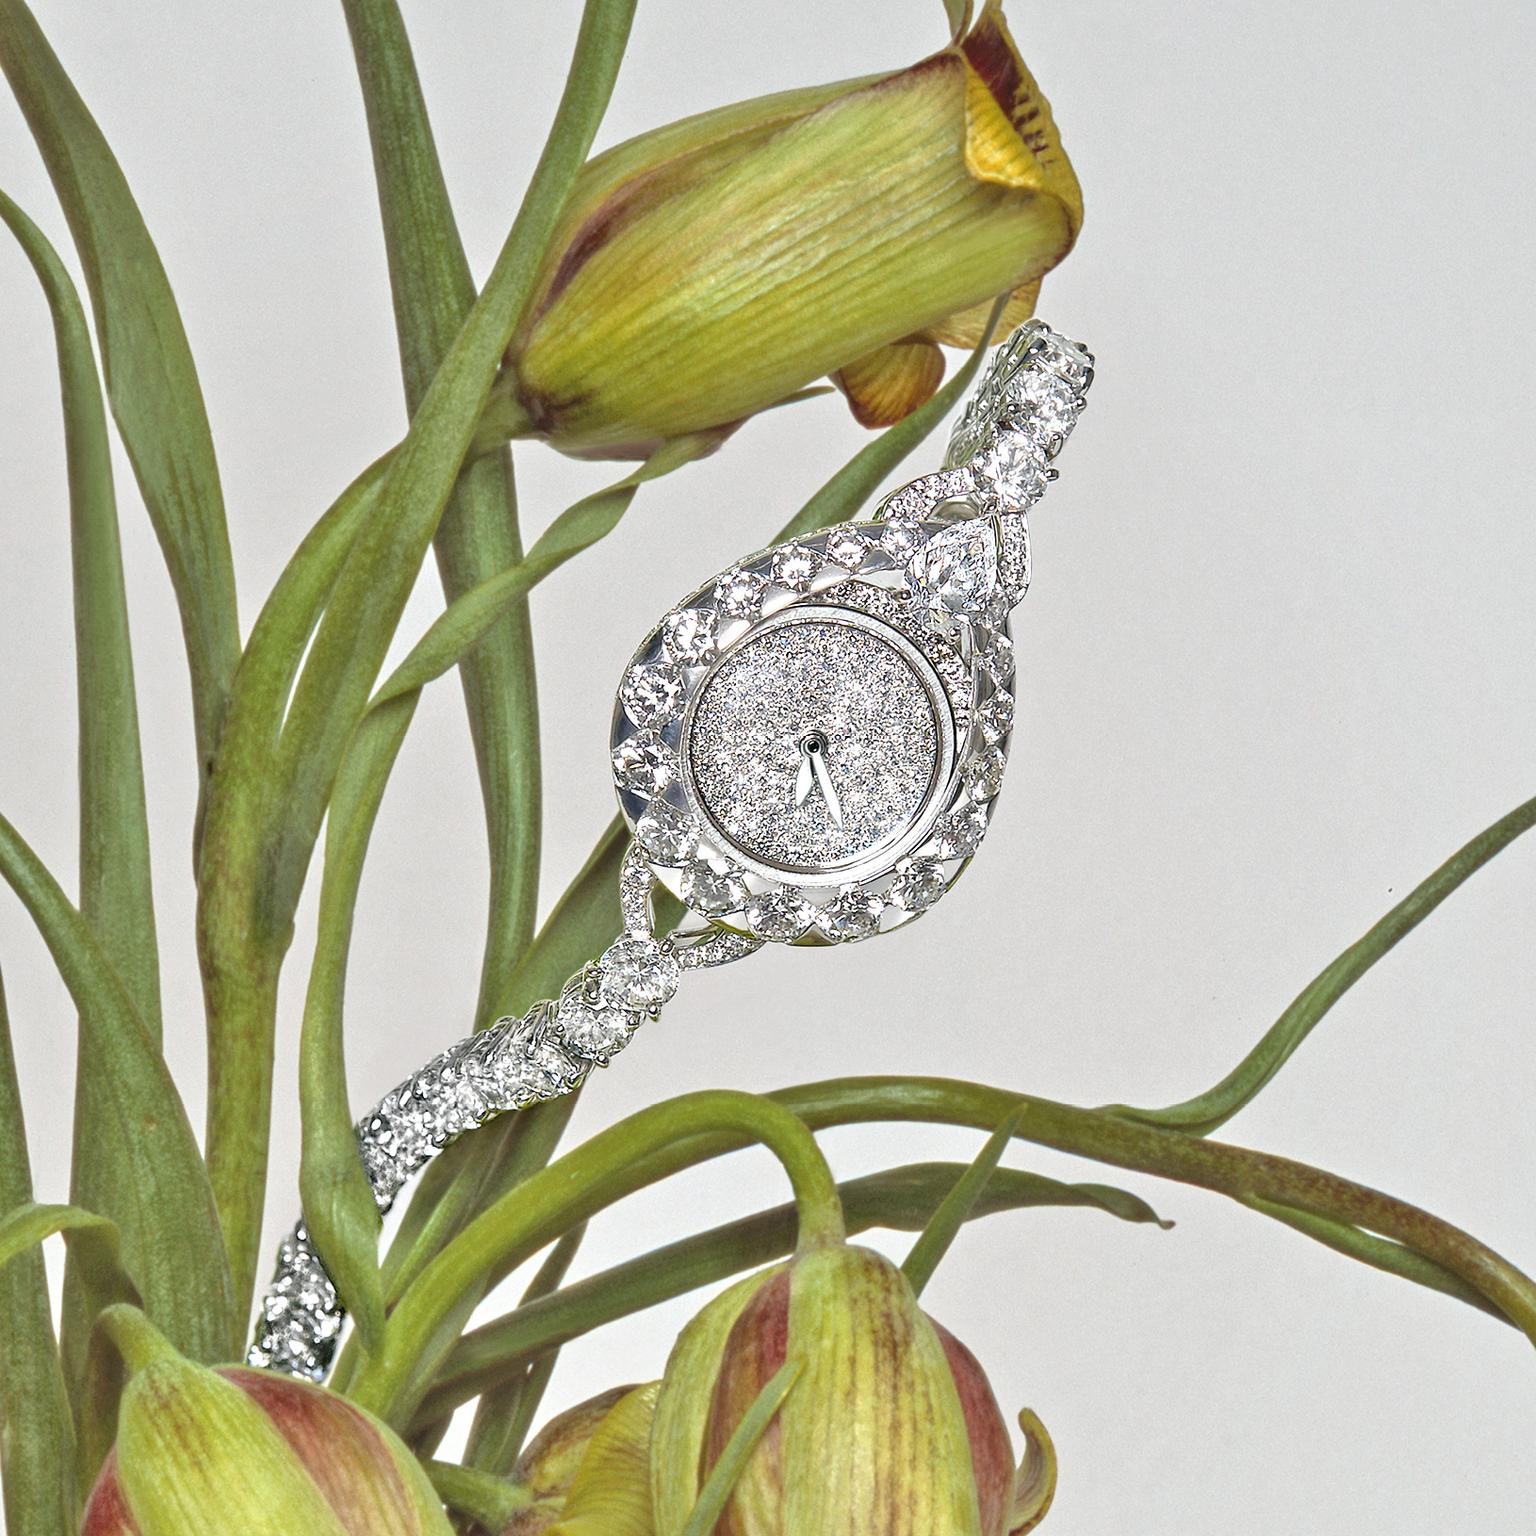 Chaumet Eclat Floral watch